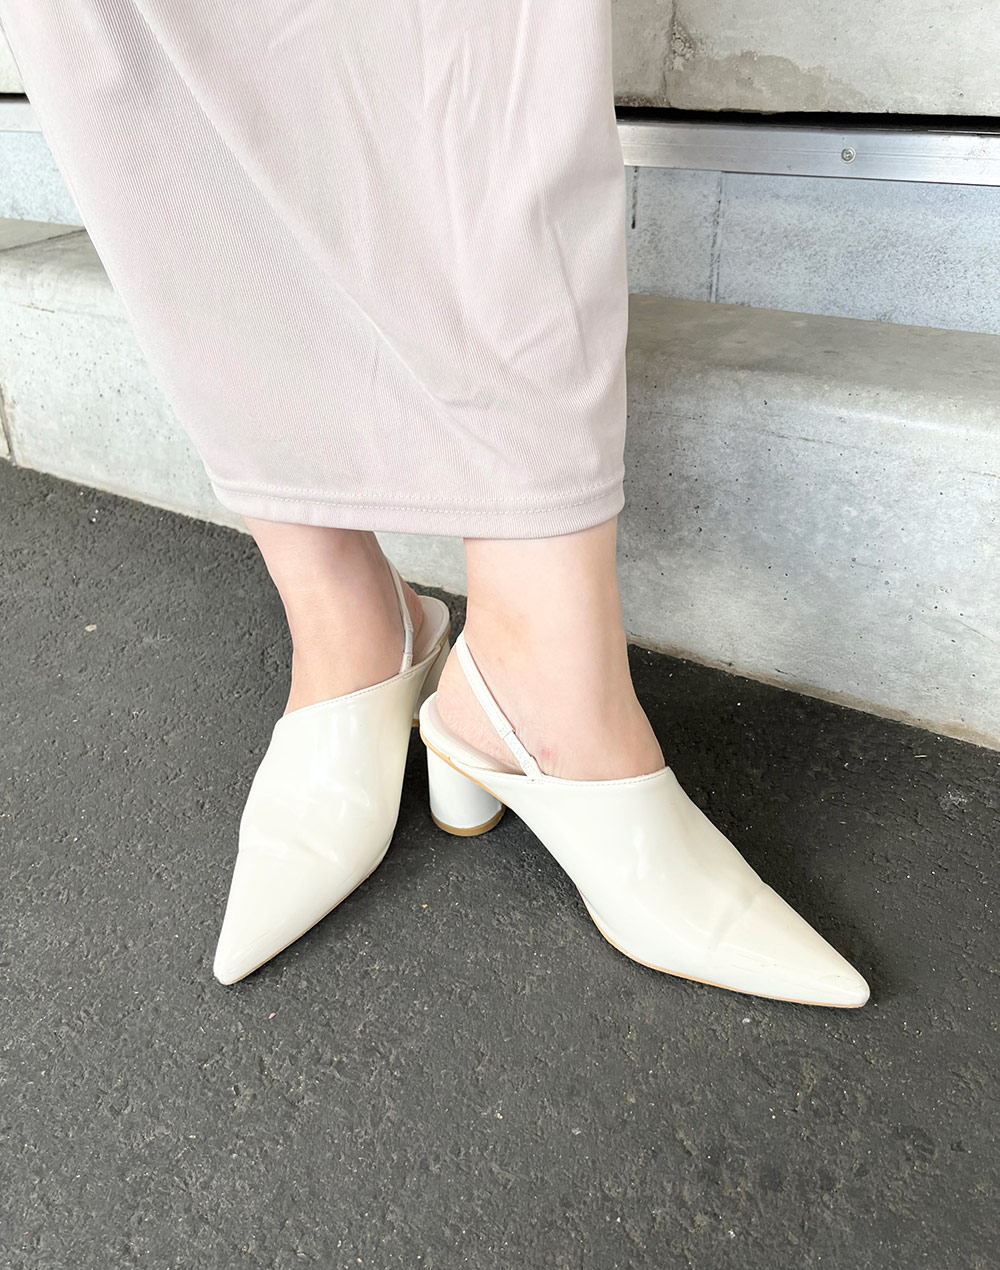 Point heal shoes・s279613（シューズ/ヒール）| 1016_kanako | 東京ガールズマーケット